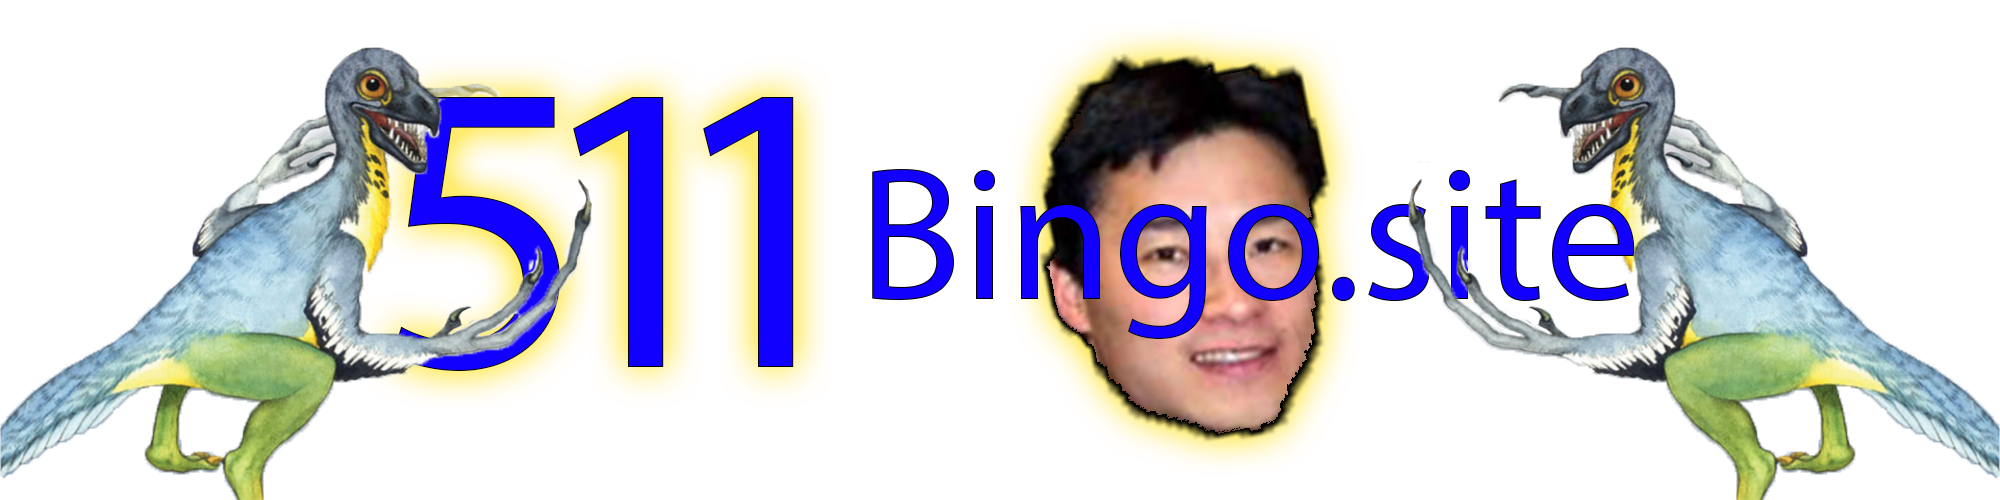 511 Bingo.site logo